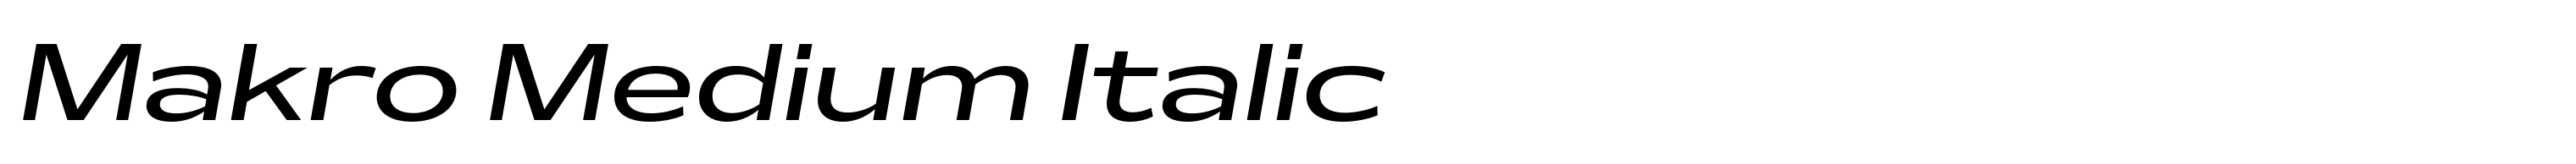 Makro Medium Italic